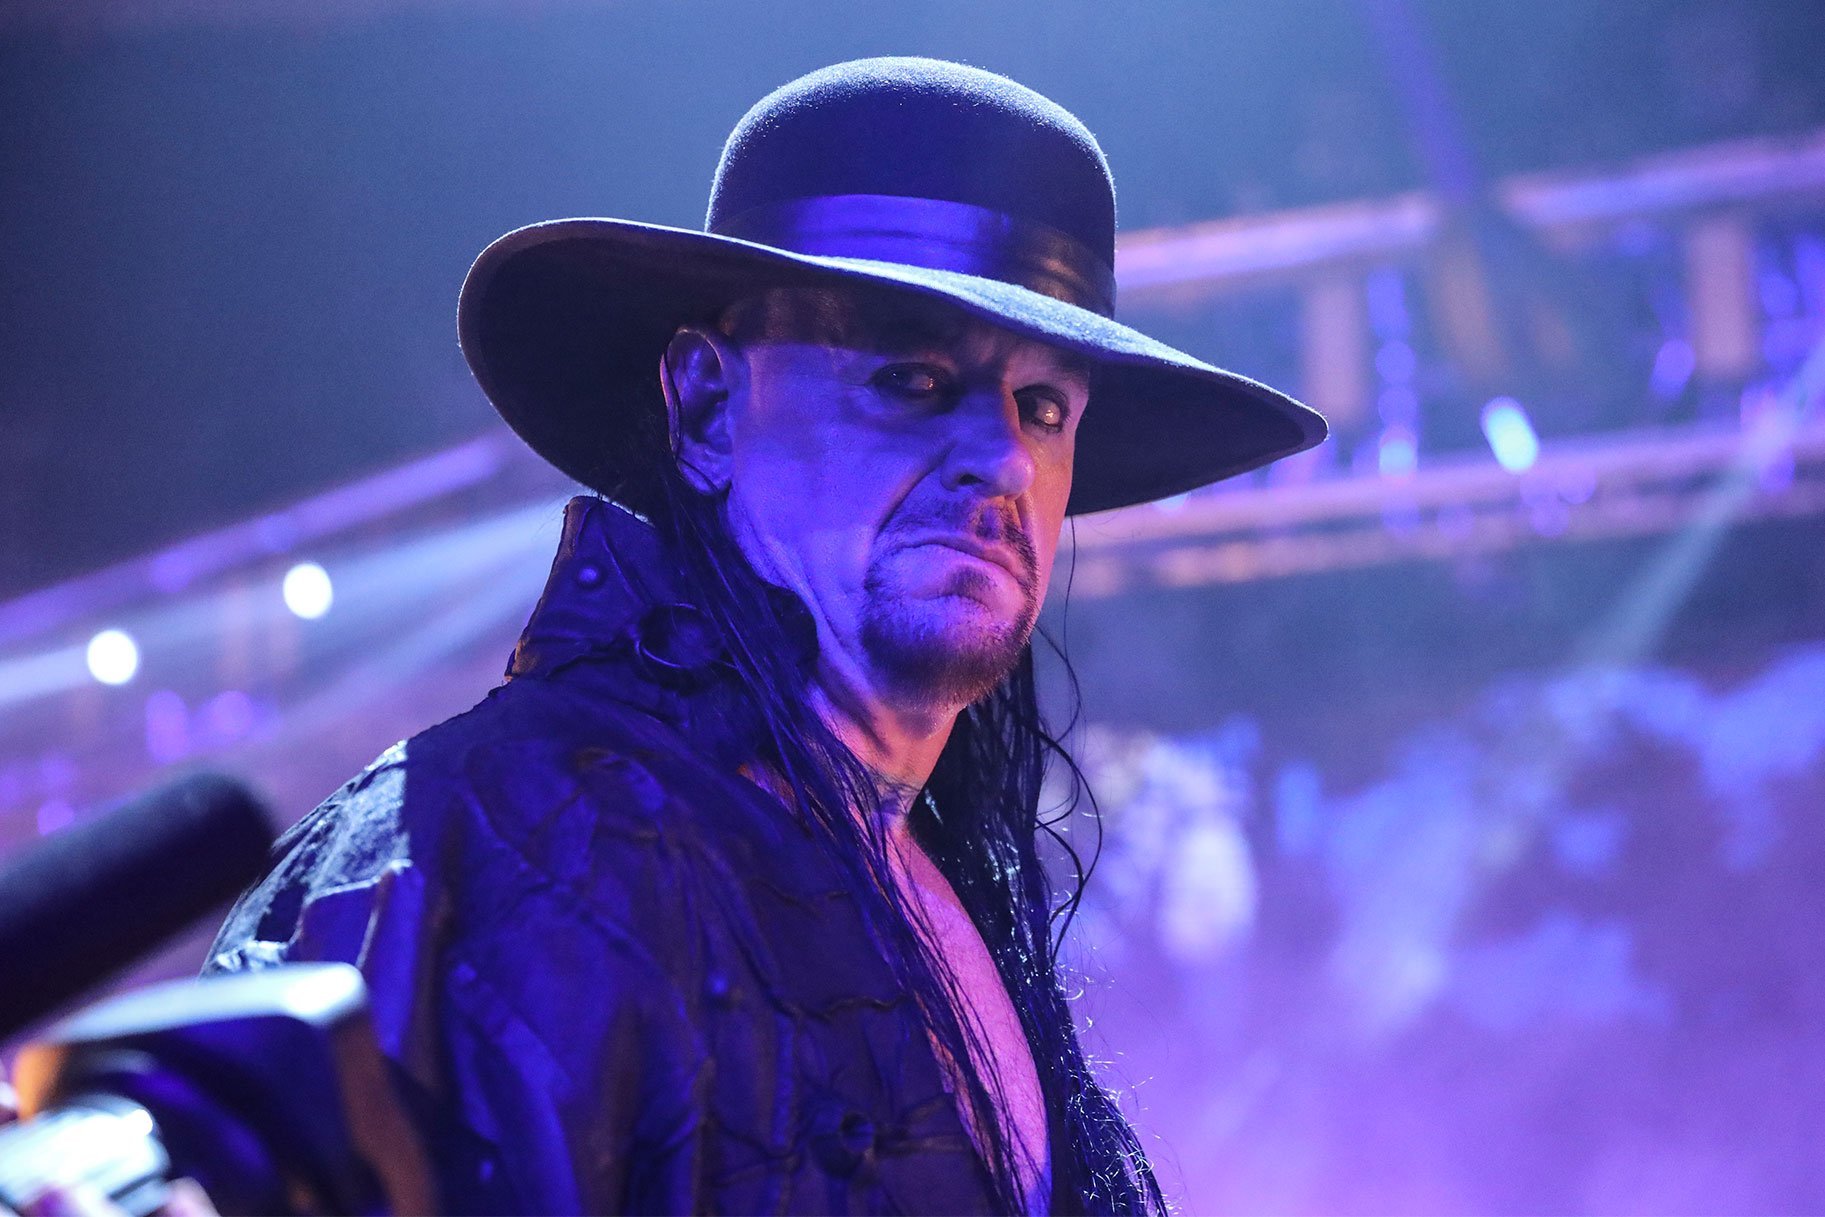 Undertaker Praises Randy Orton’s RKO as “Relatively Tolerable” on the Body